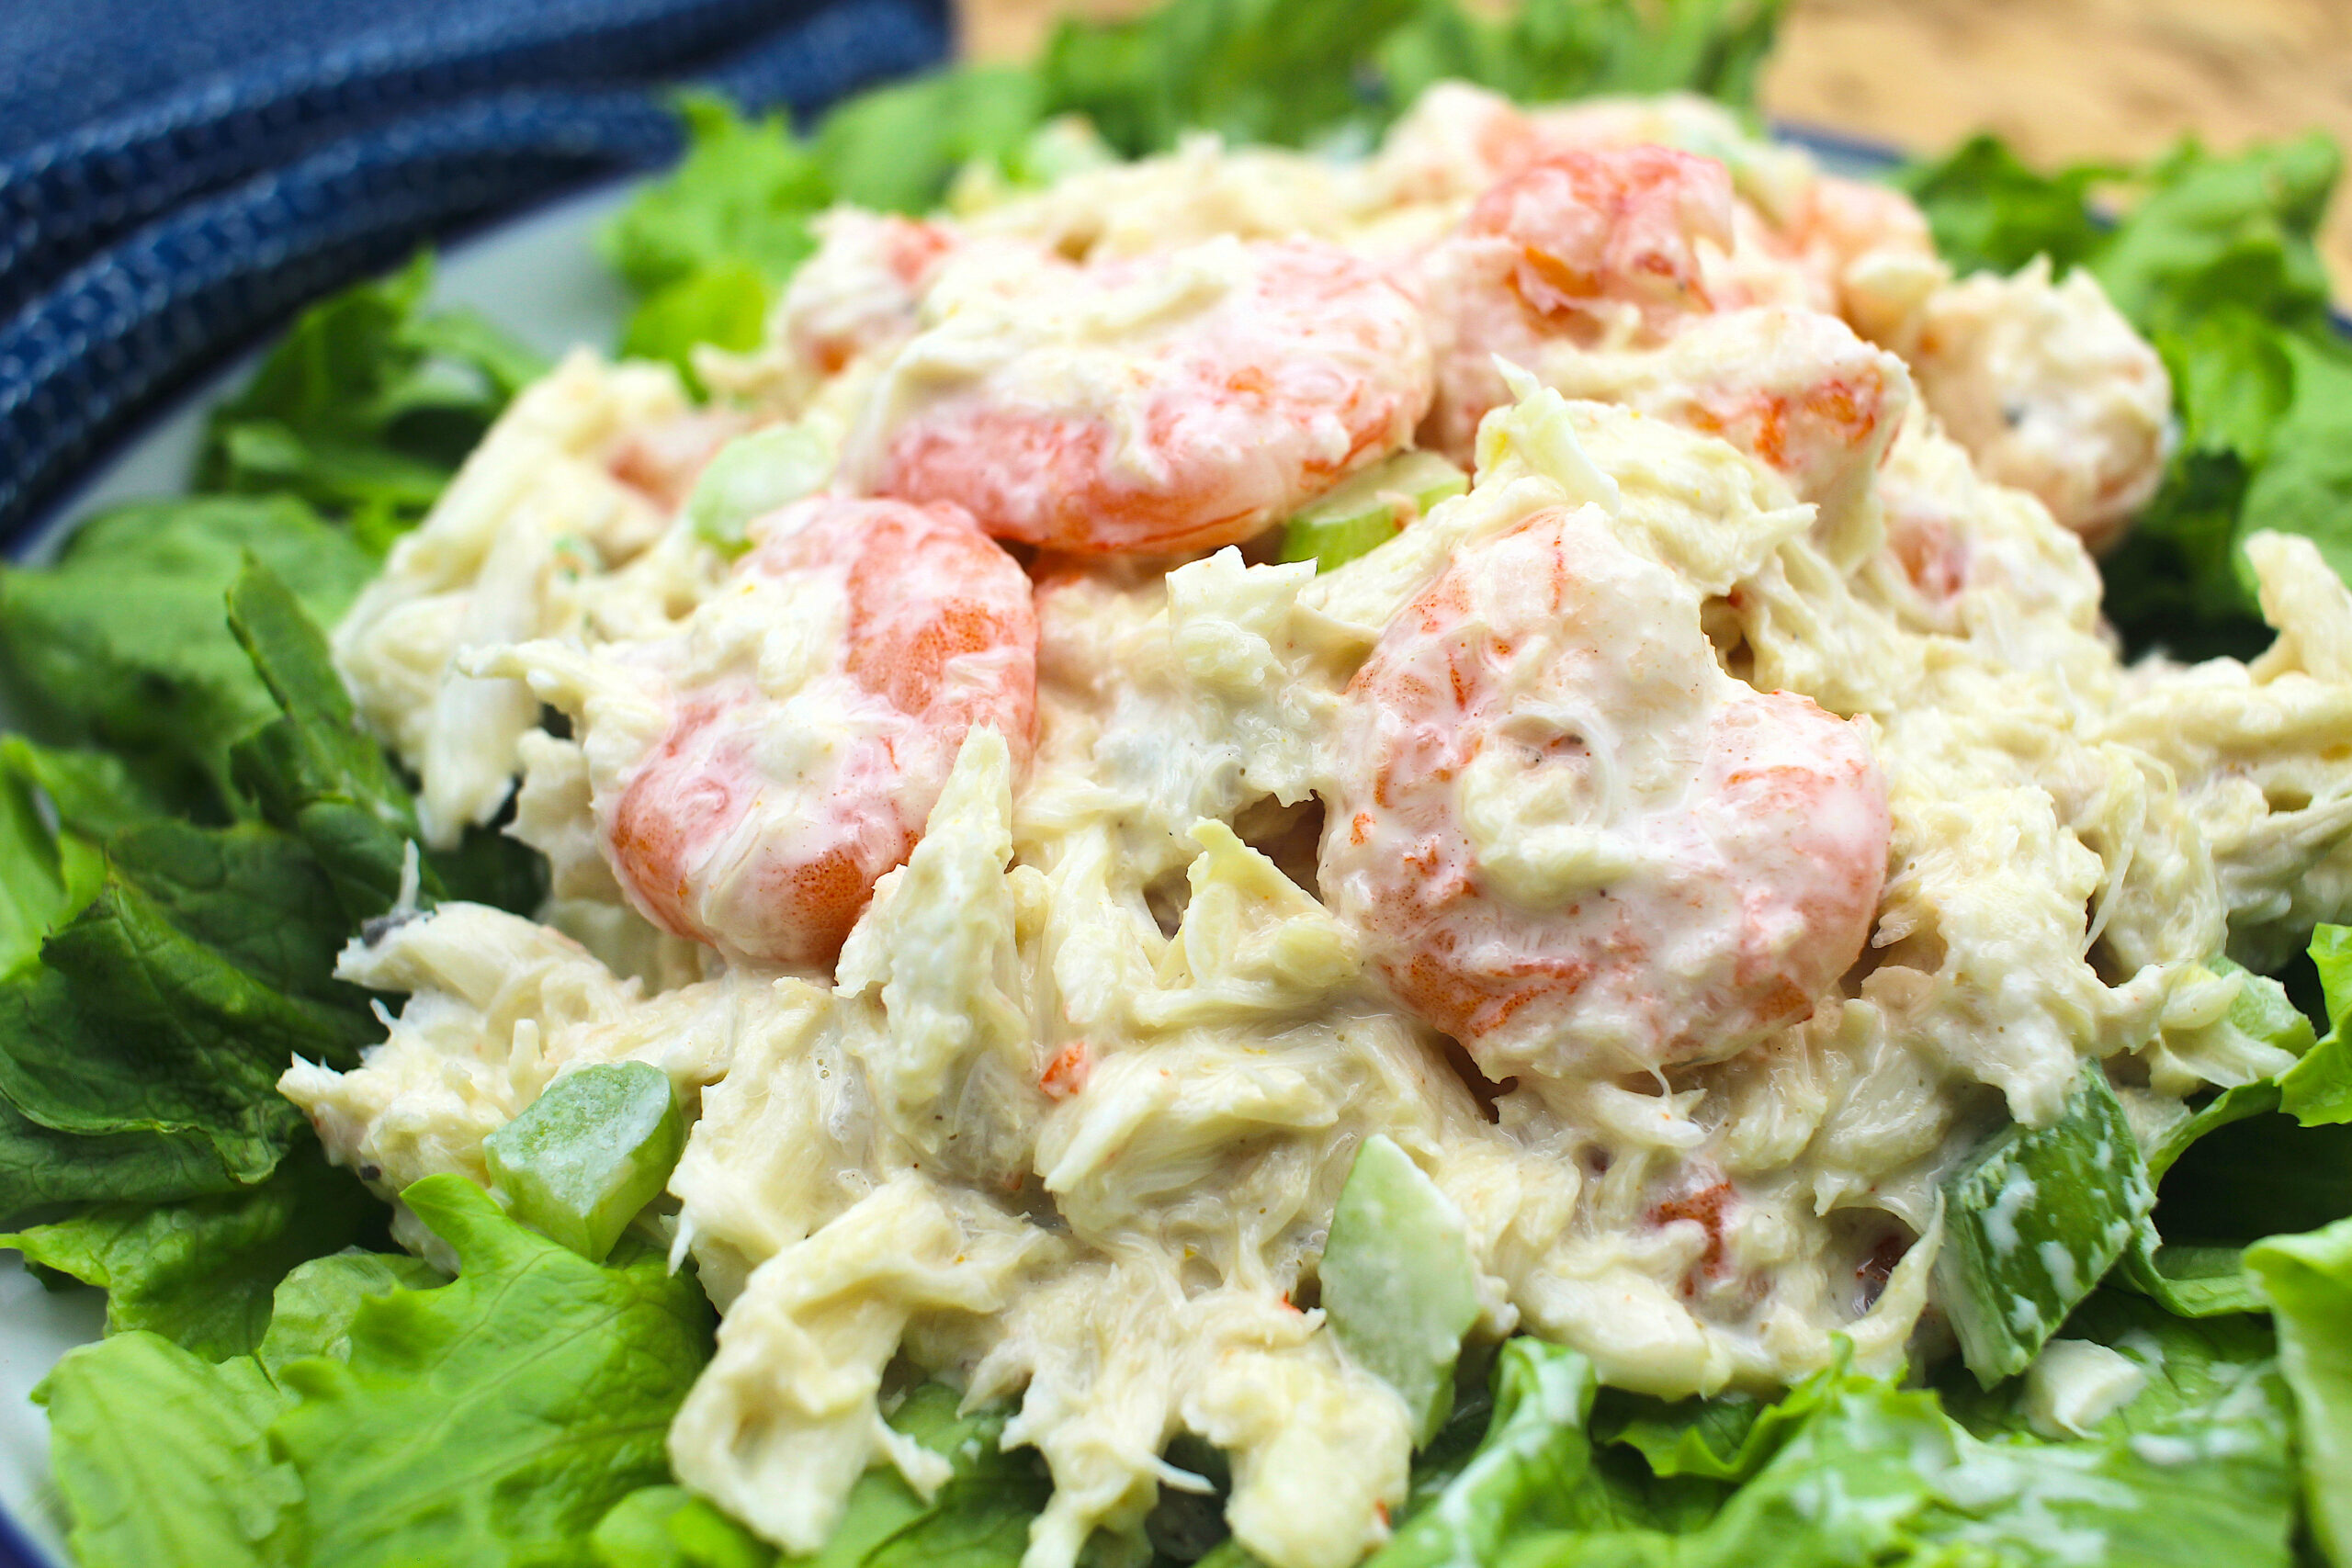 image: crab and shrimp salad on lettuce bed.